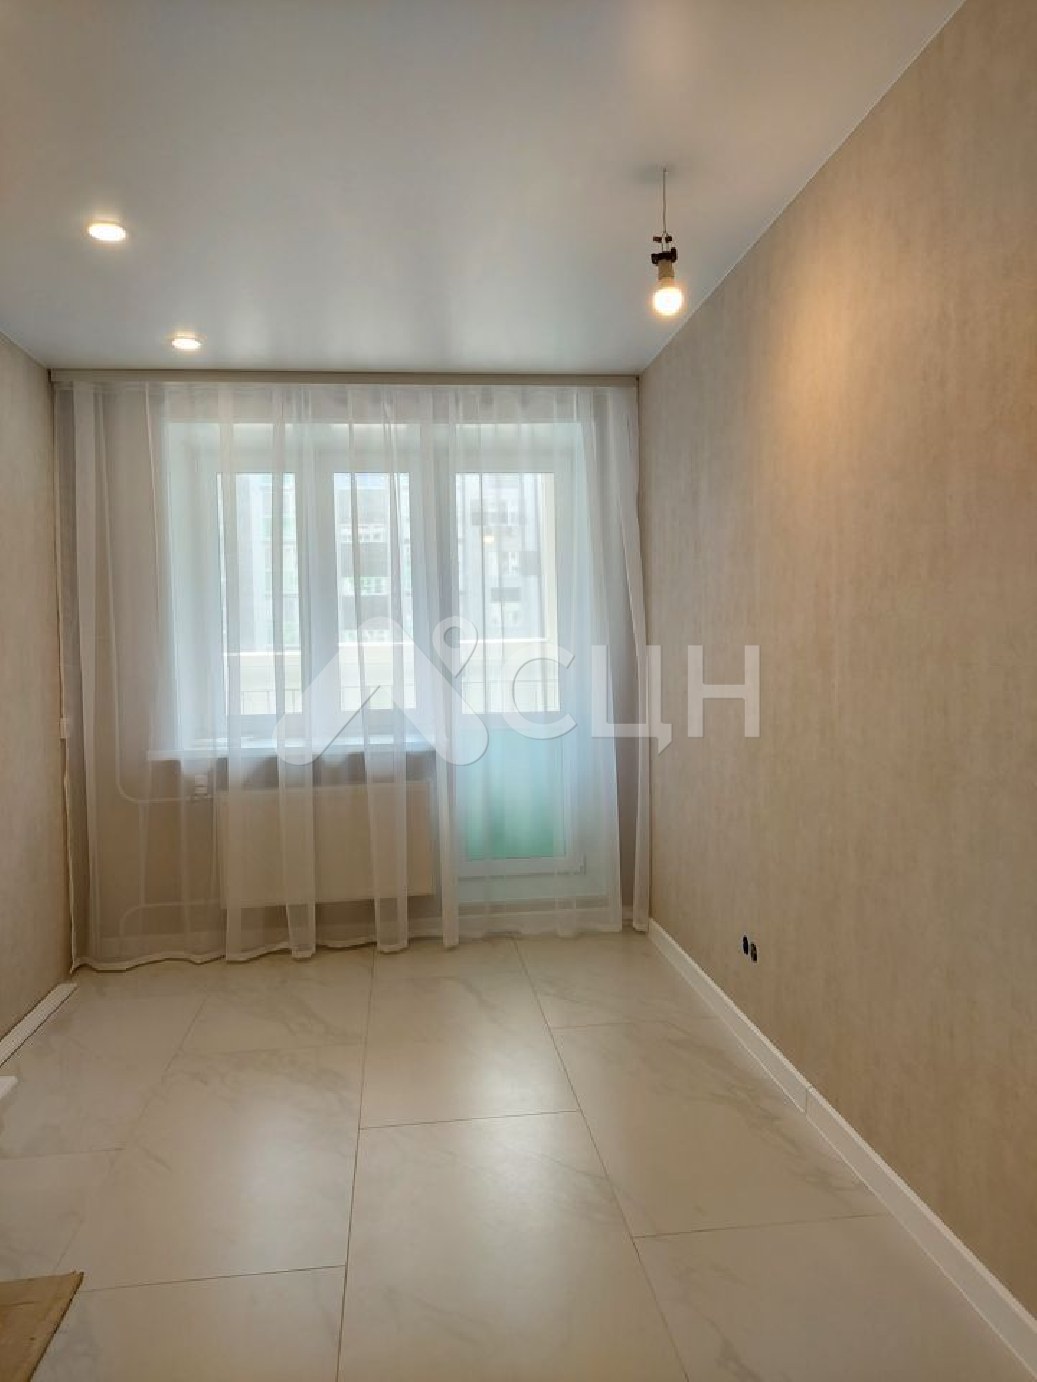 циан саров квартиры
: Г. Саров, улица Чкалова, 55, 1-комн квартира, этаж 1 из 5, продажа.